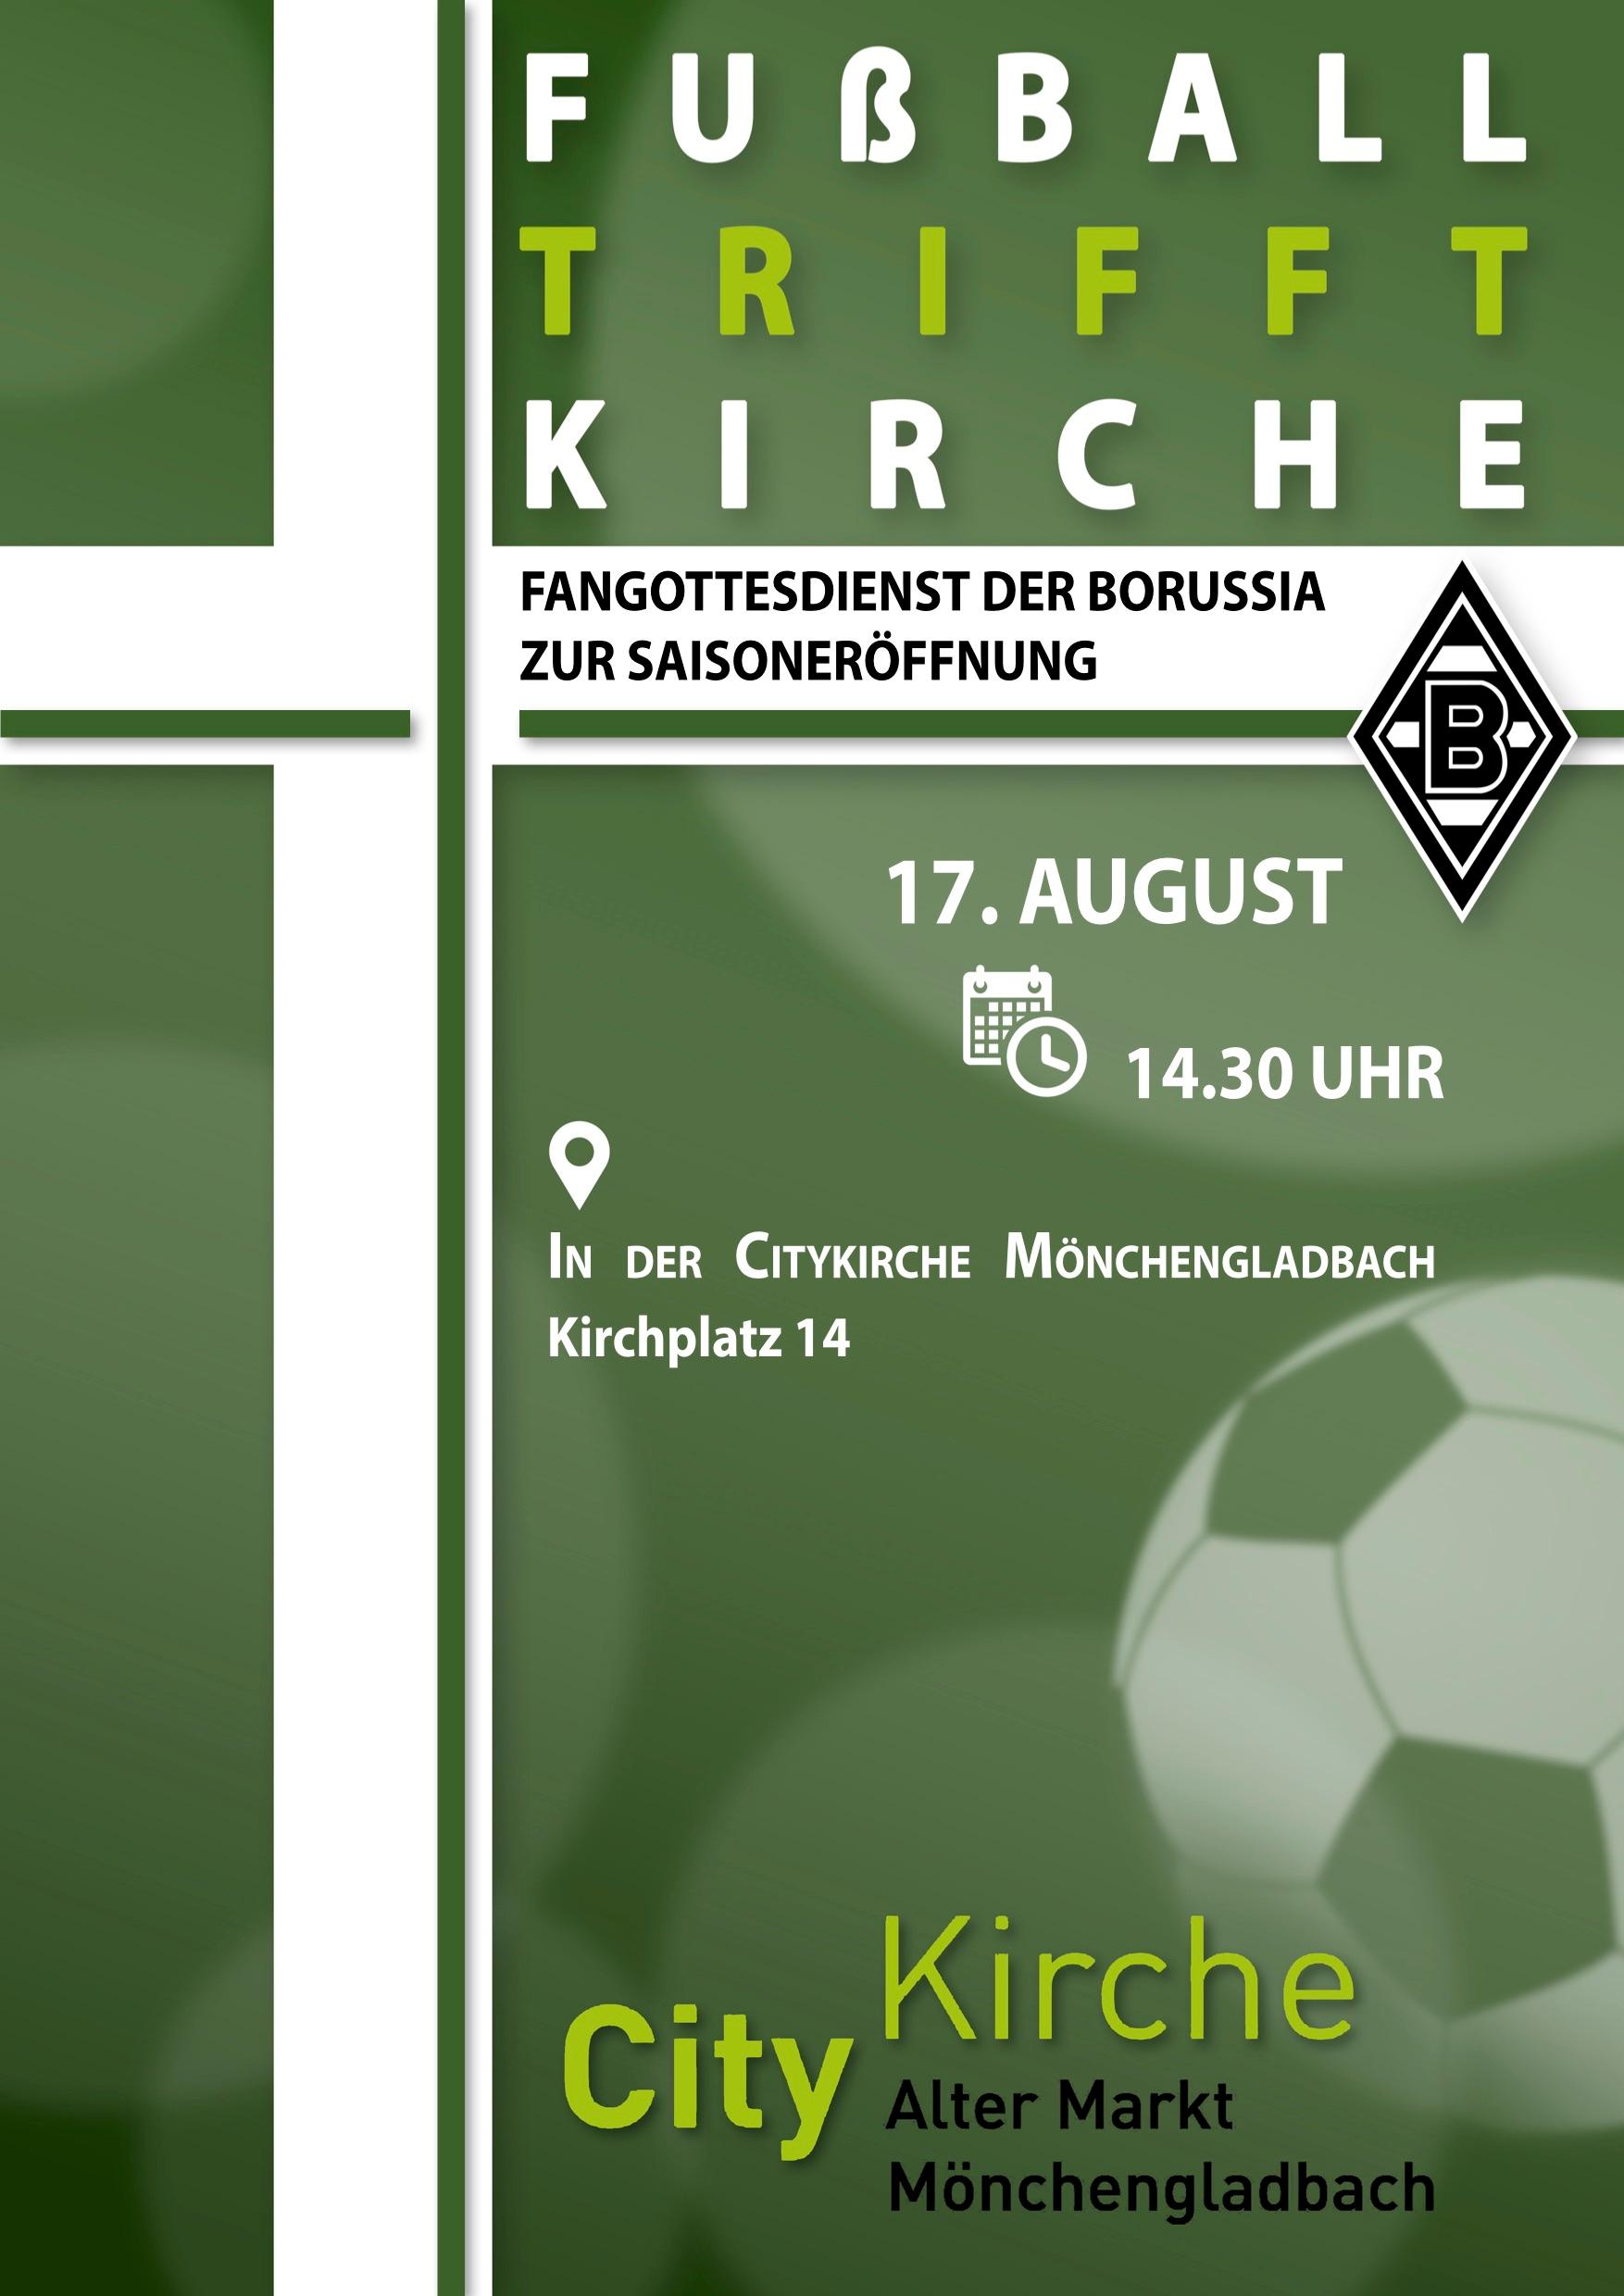 Fest des Teilens (c) Borussia Mönchengladbach